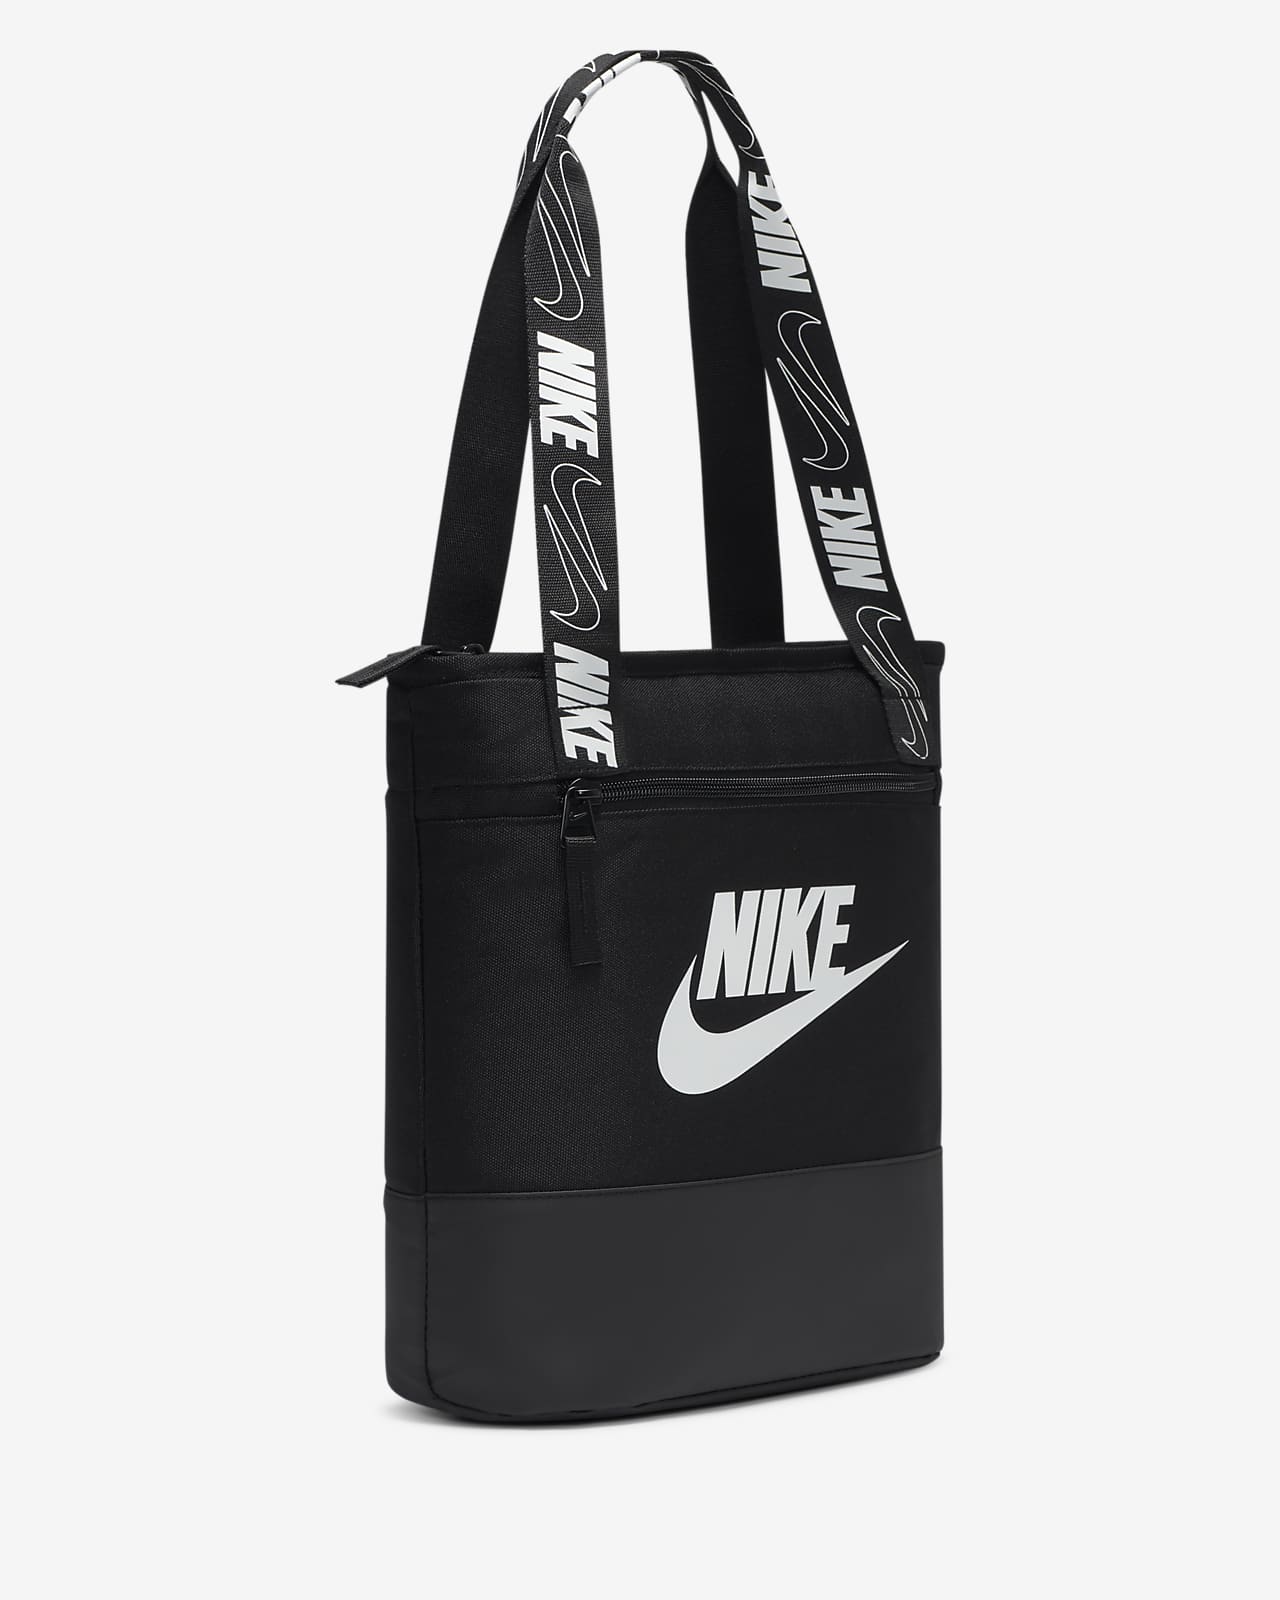 Nike Futura Lunch Bag Lunch Bag (13L).